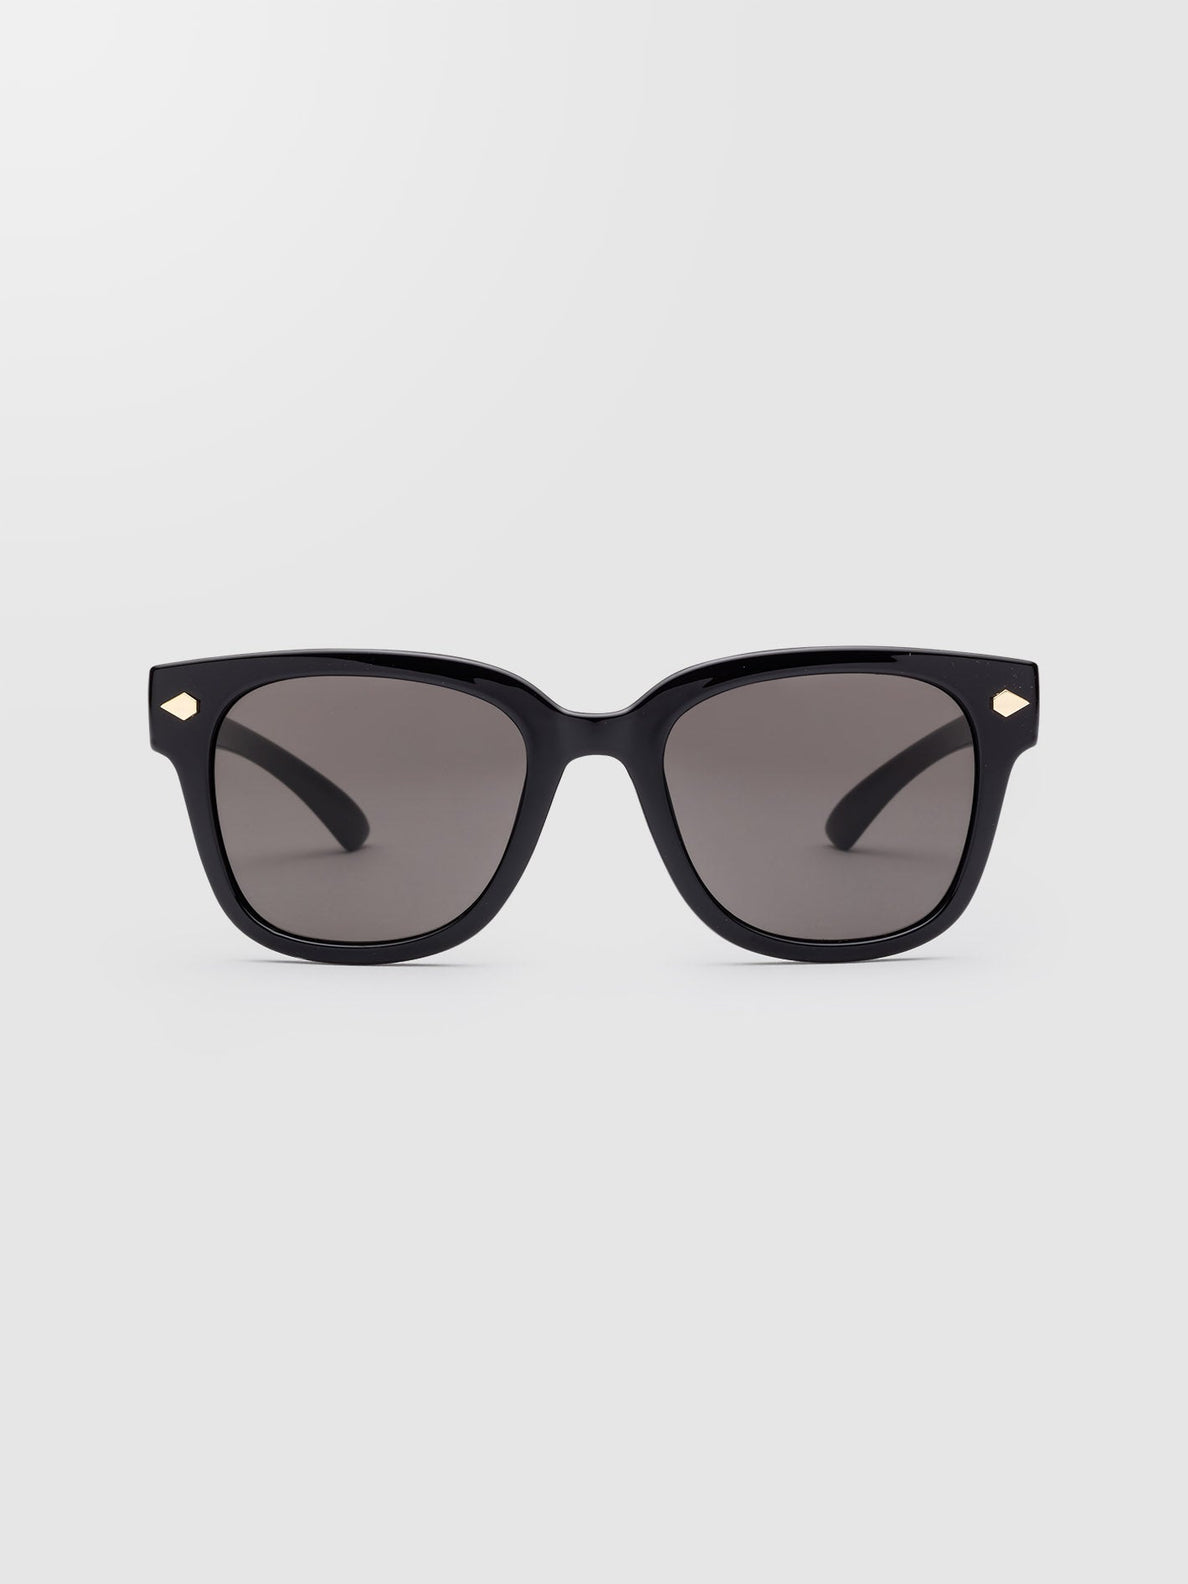 Freestyle Gloss Black Sunglasses (Gray Lens) - GRAY (VE02100201_0000) [F]